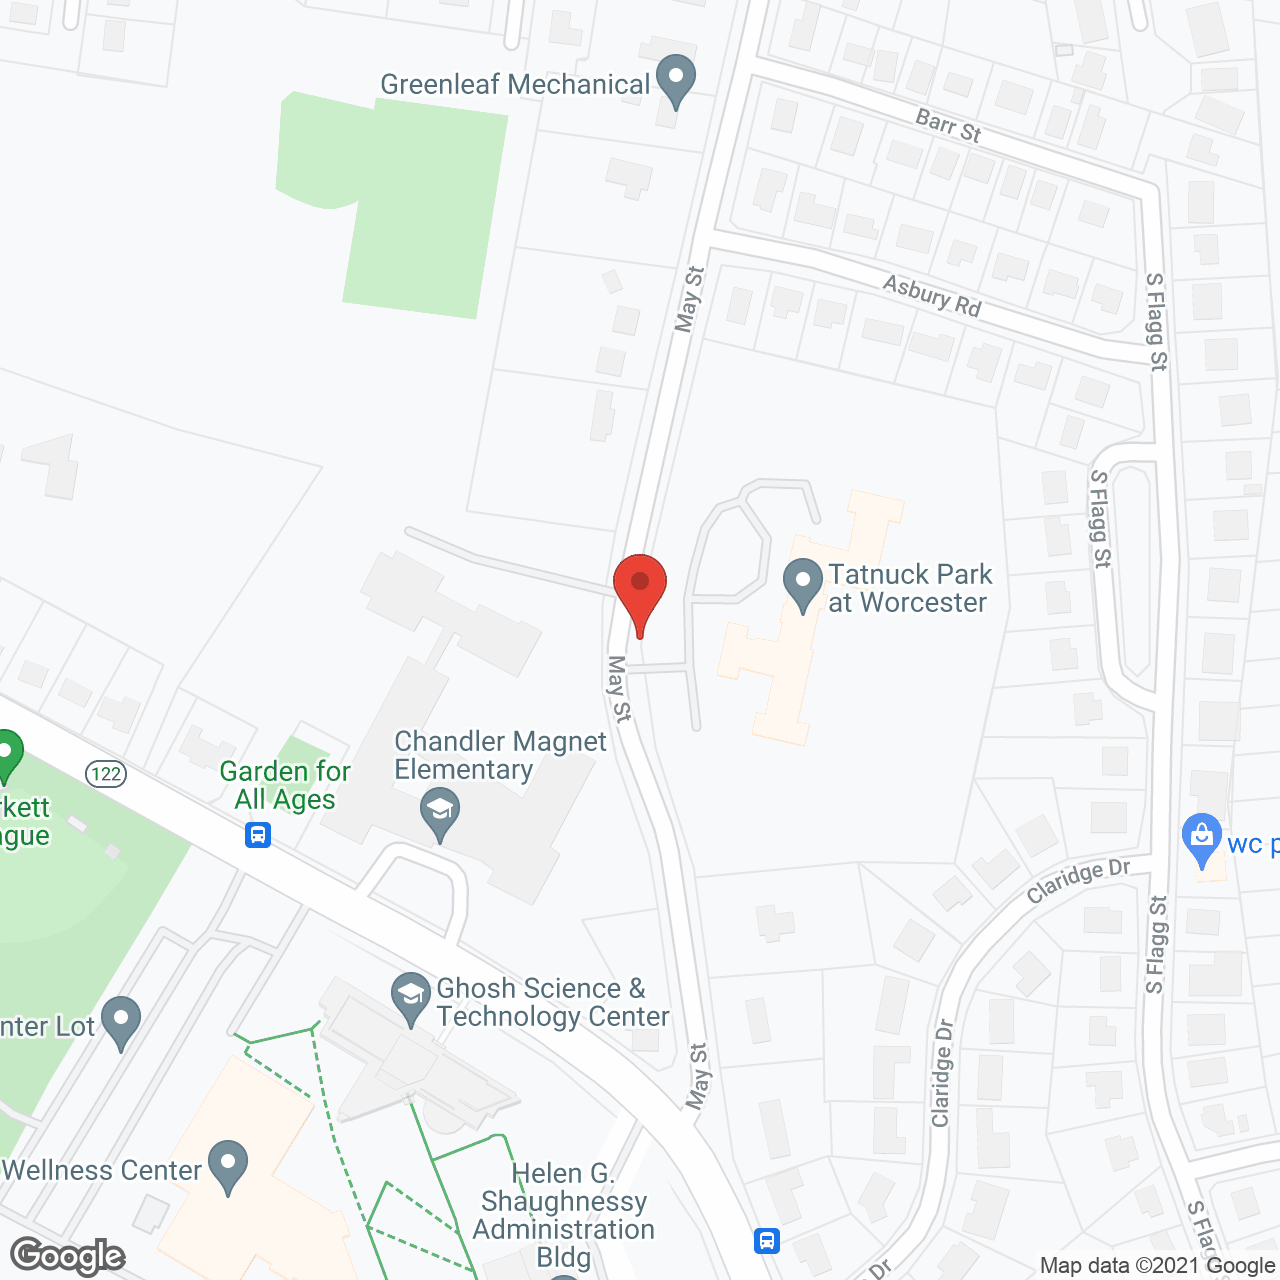 Tatnuck Park At Worcester in google map